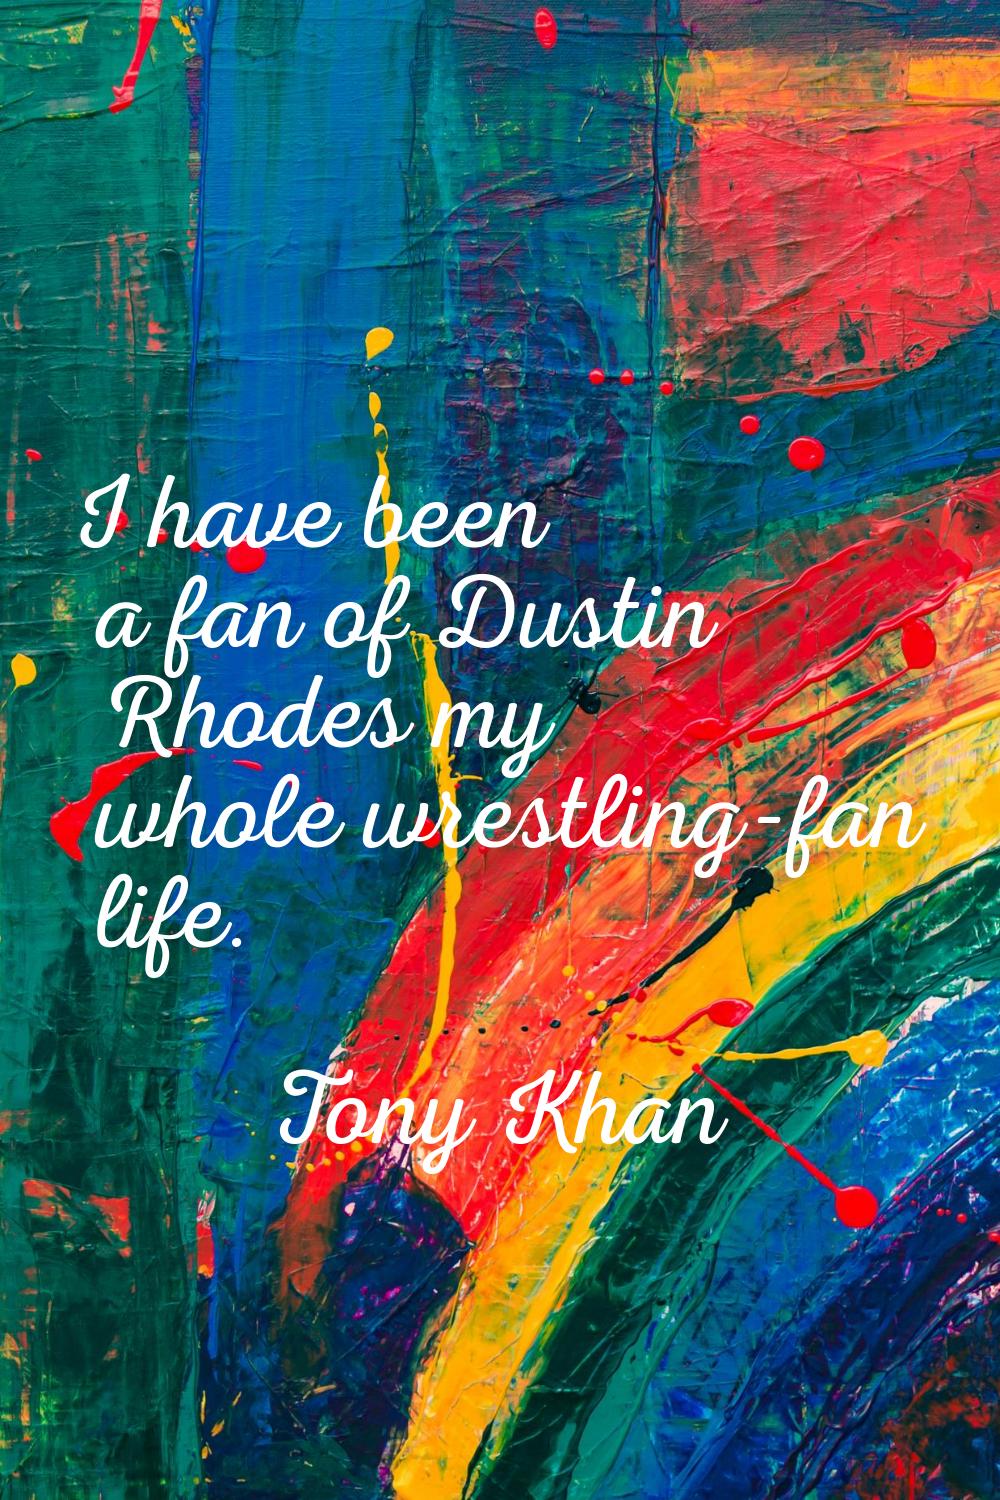 I have been a fan of Dustin Rhodes my whole wrestling-fan life.